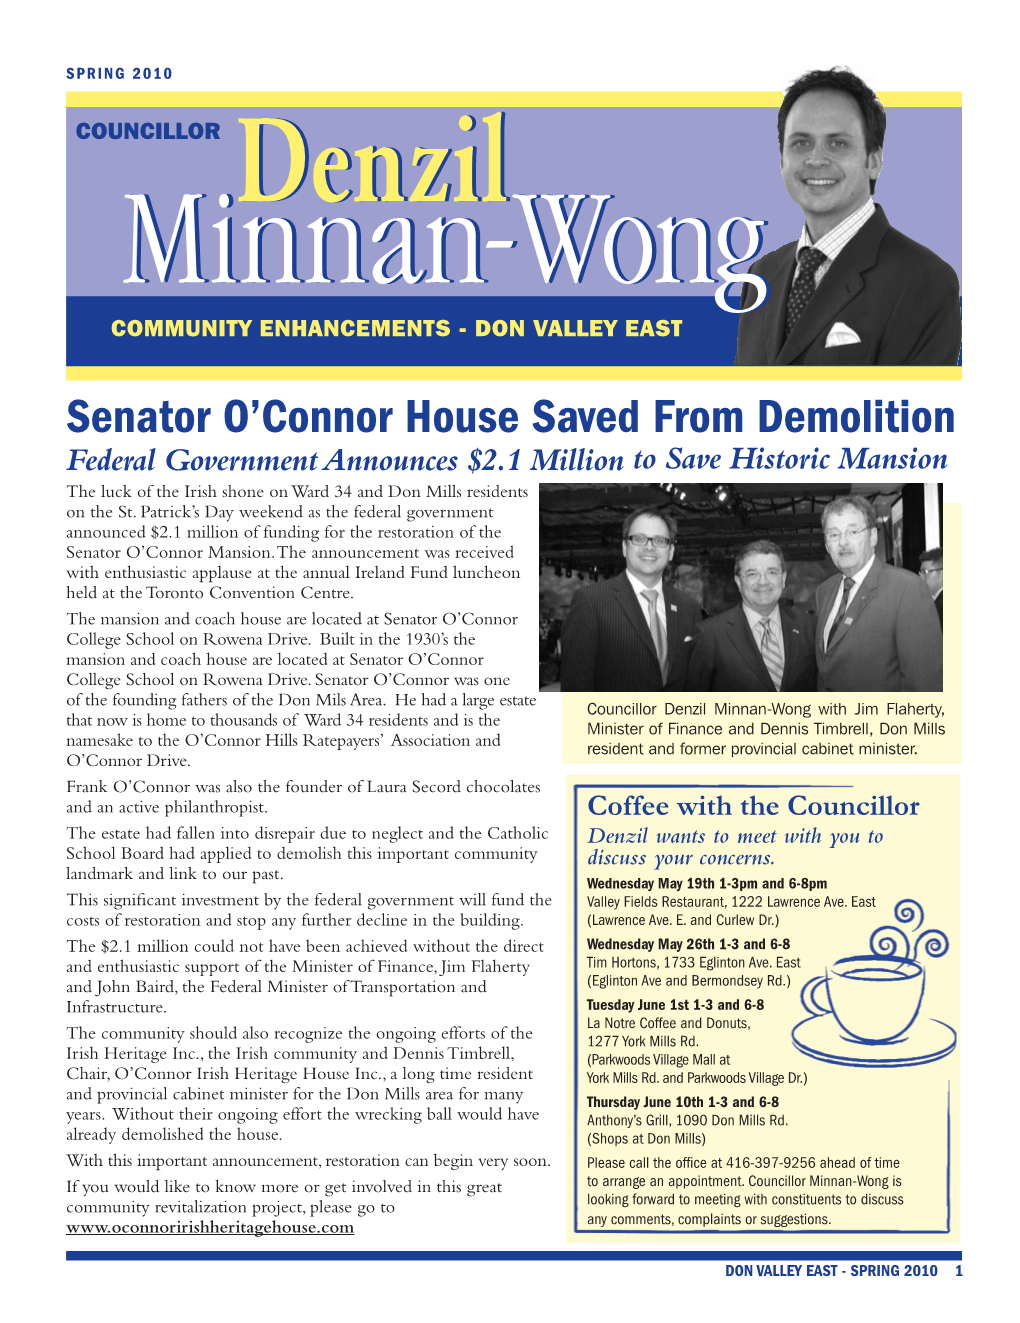 Senator O'connor House Saved from Demolition